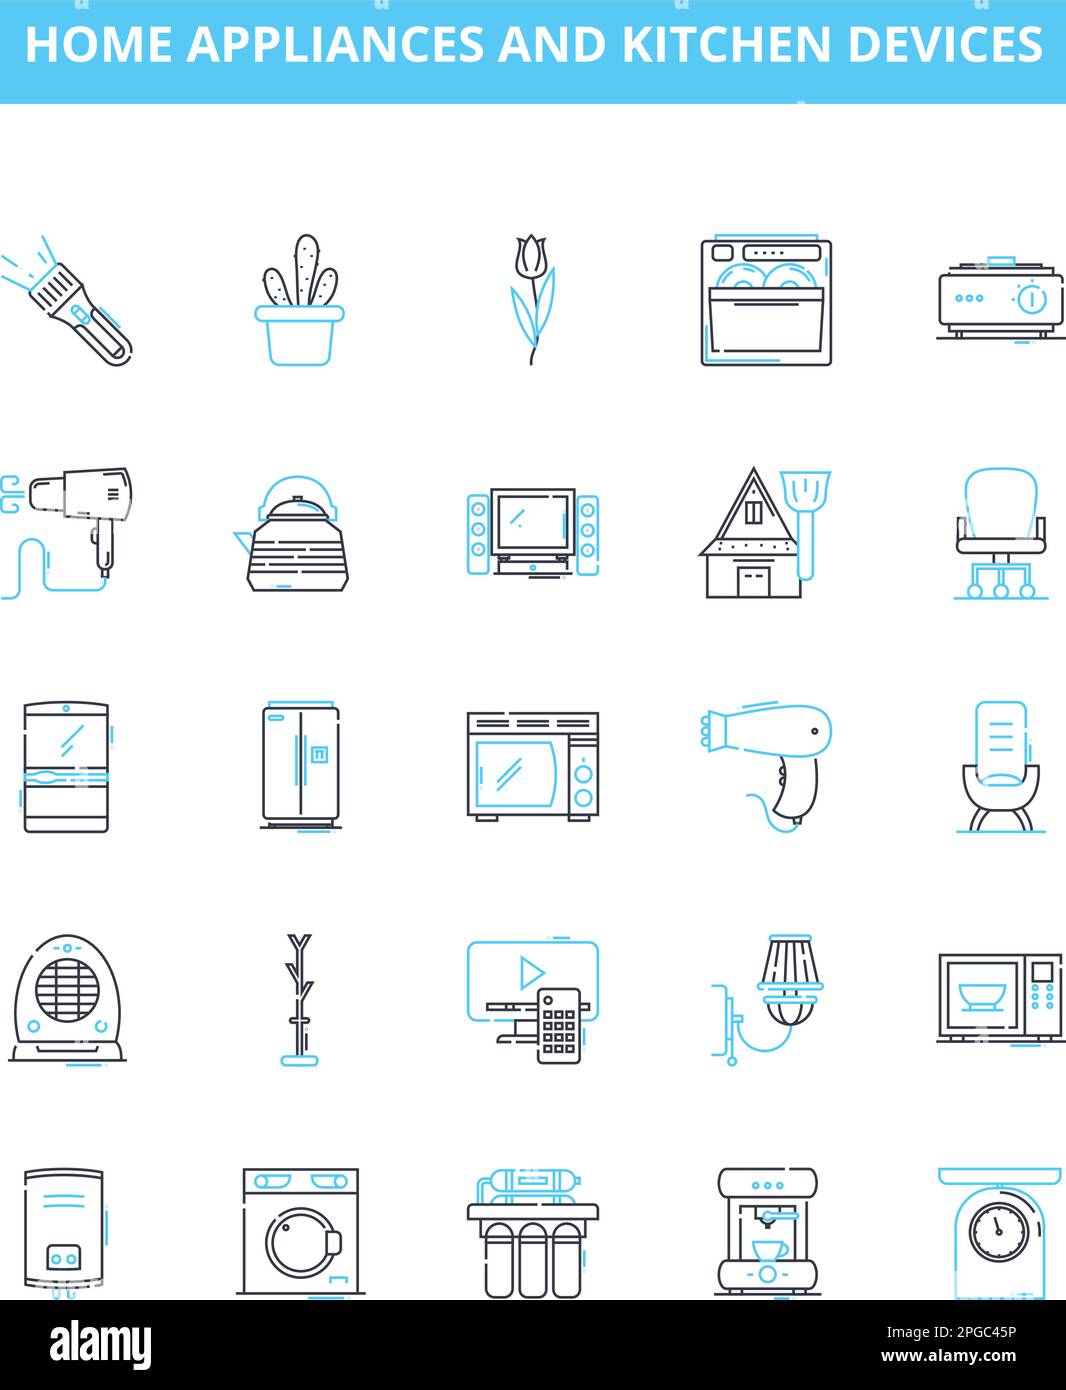 Home appliances and kitchen devices vector line icons set. Stove, Microwave, Kettle, Toaster, Dishwasher, Refrigerator, Blender illustration outline Stock Vector